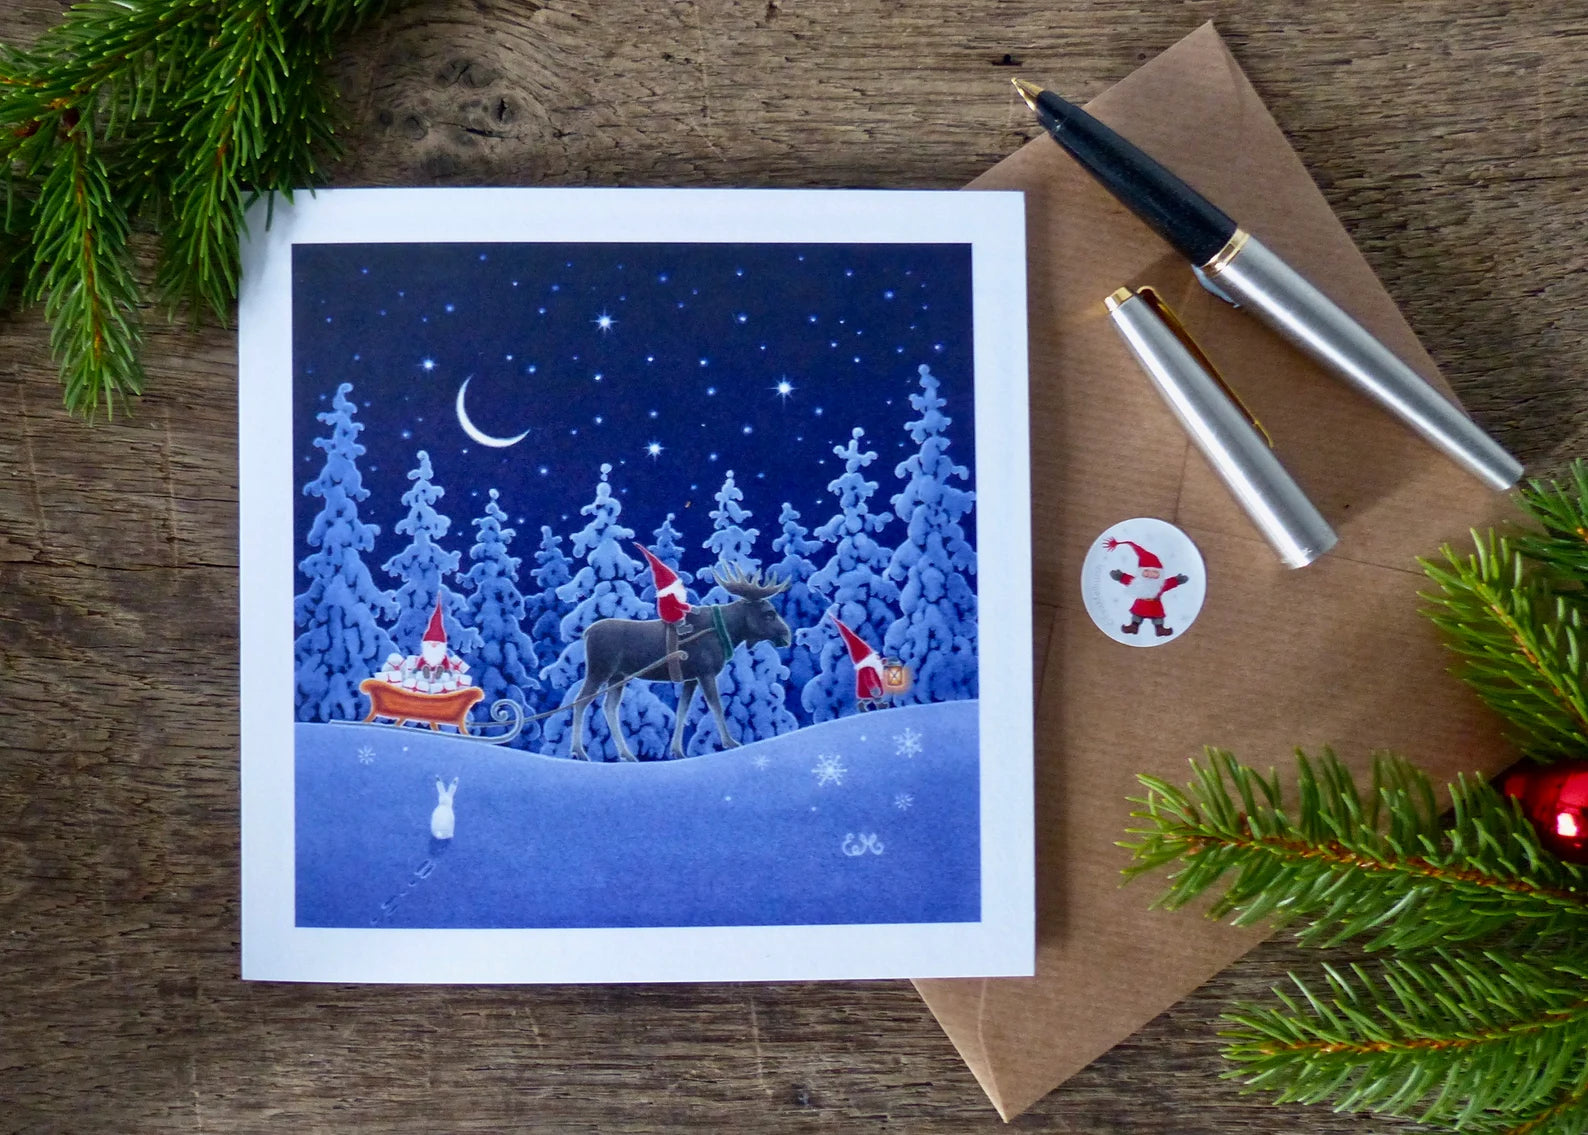 Scandinavian Christmas card by Eva Melhuish - Christmas Moose